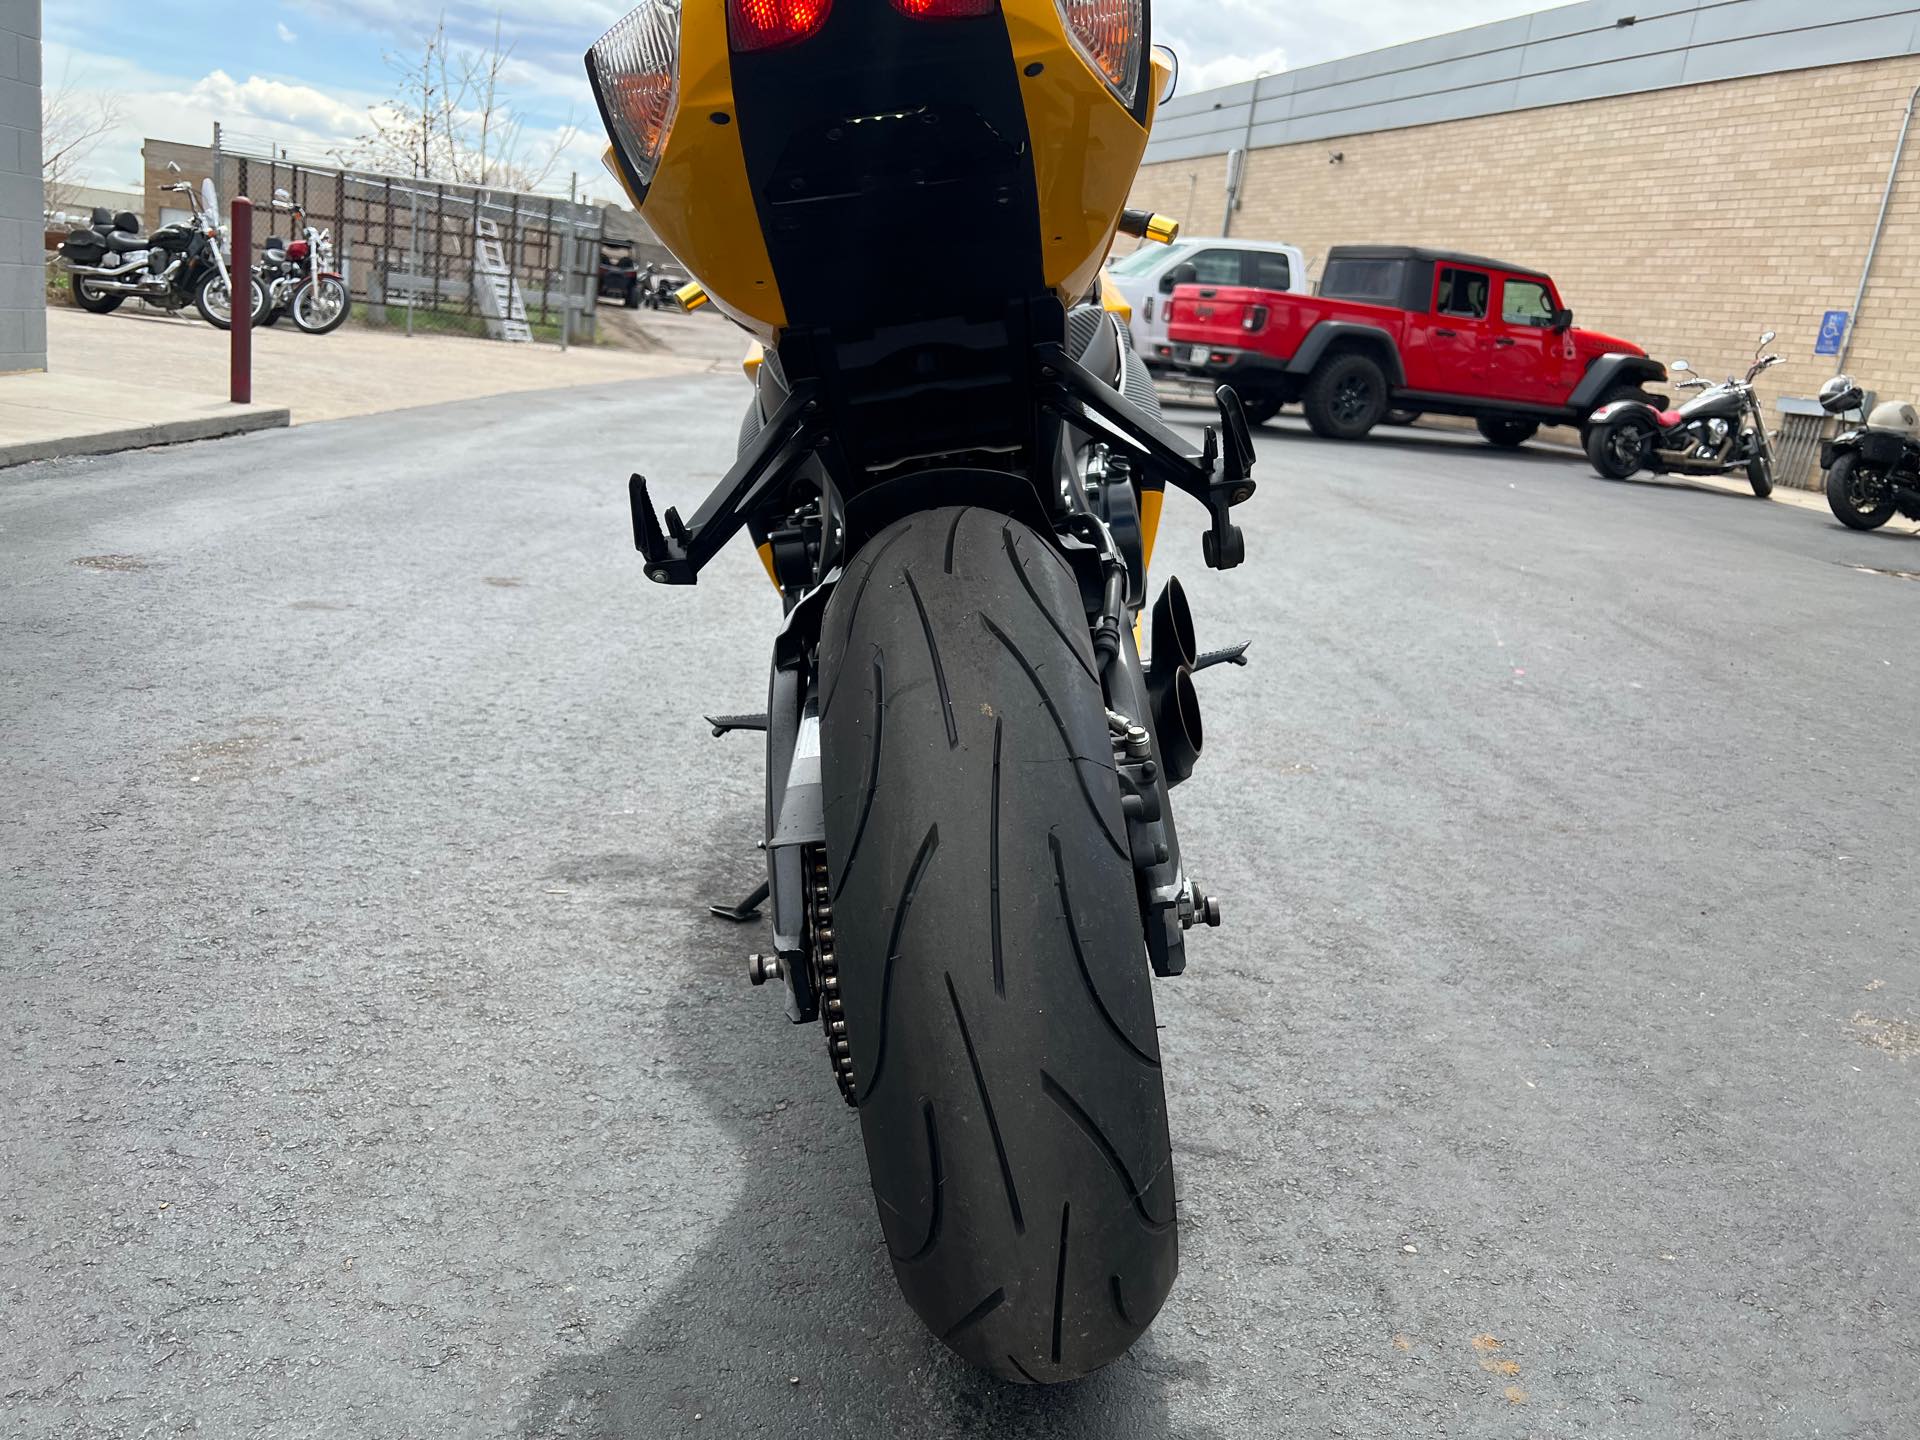 2017 Suzuki GSX-R 750 at Aces Motorcycles - Fort Collins